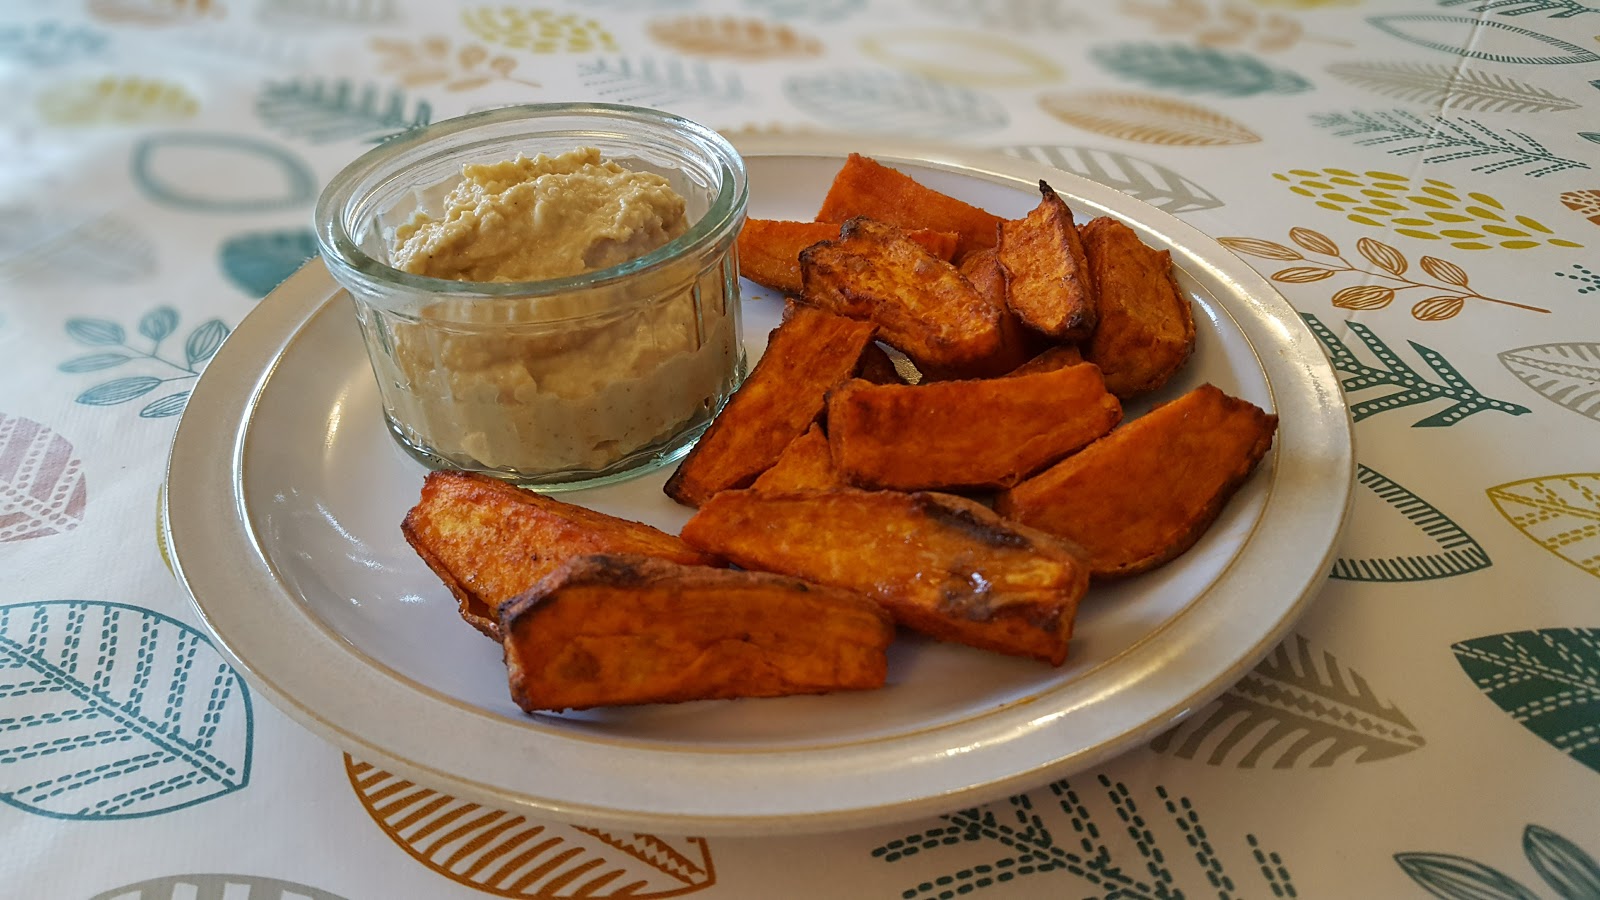 Sweet potato wedges and hummus